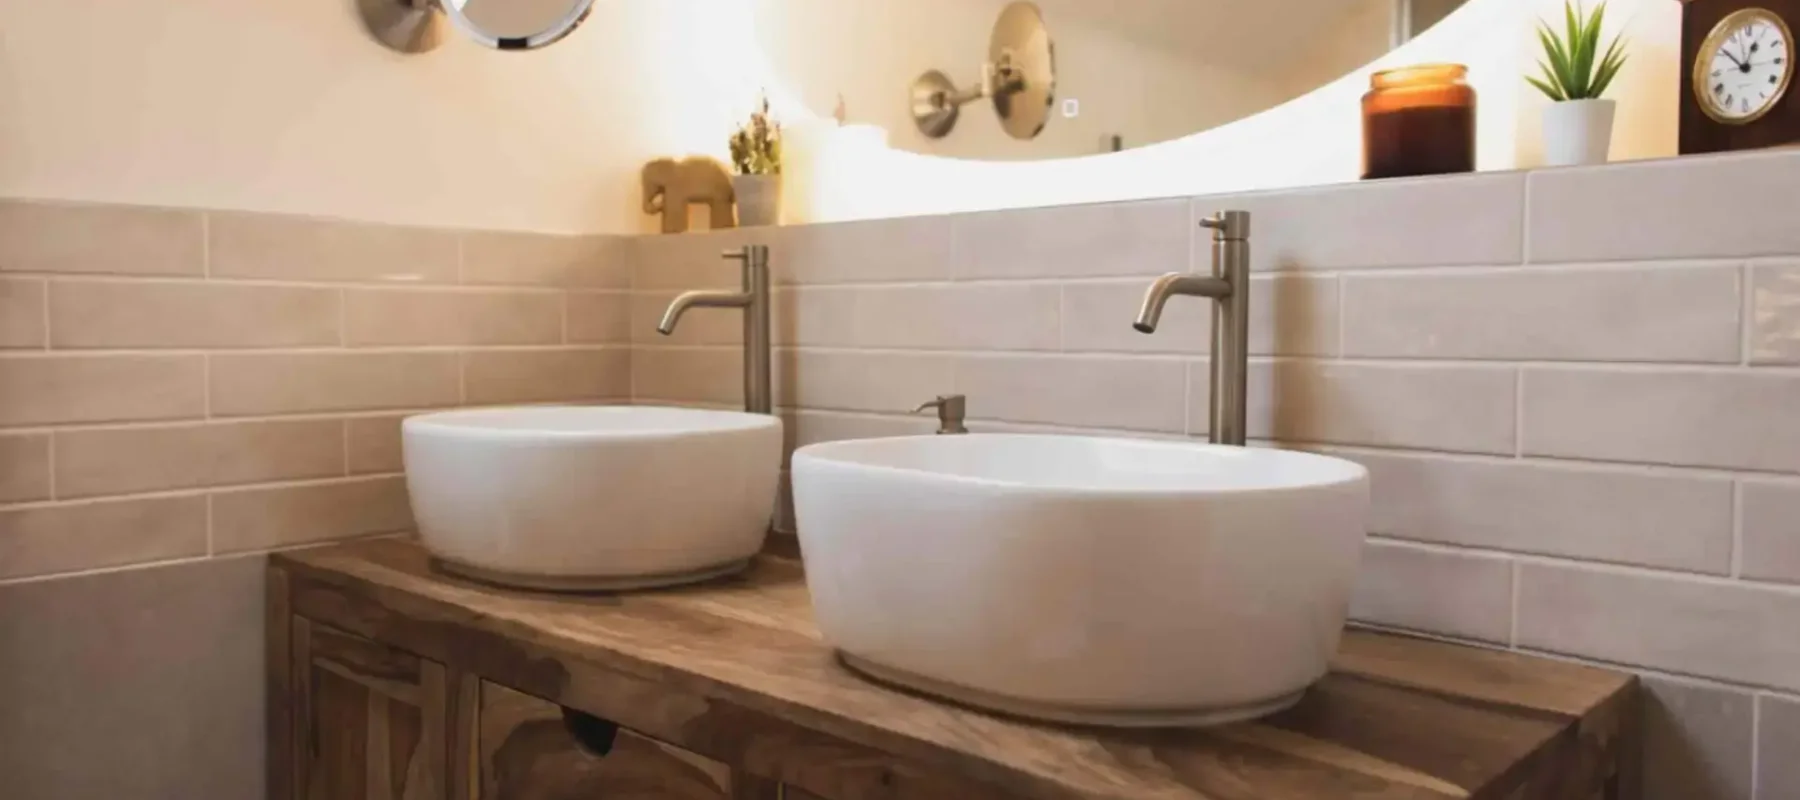 renovation-bathroom-woody-craftsman-sink-large-mirror-ireland-aidan-kelly-construction-projects